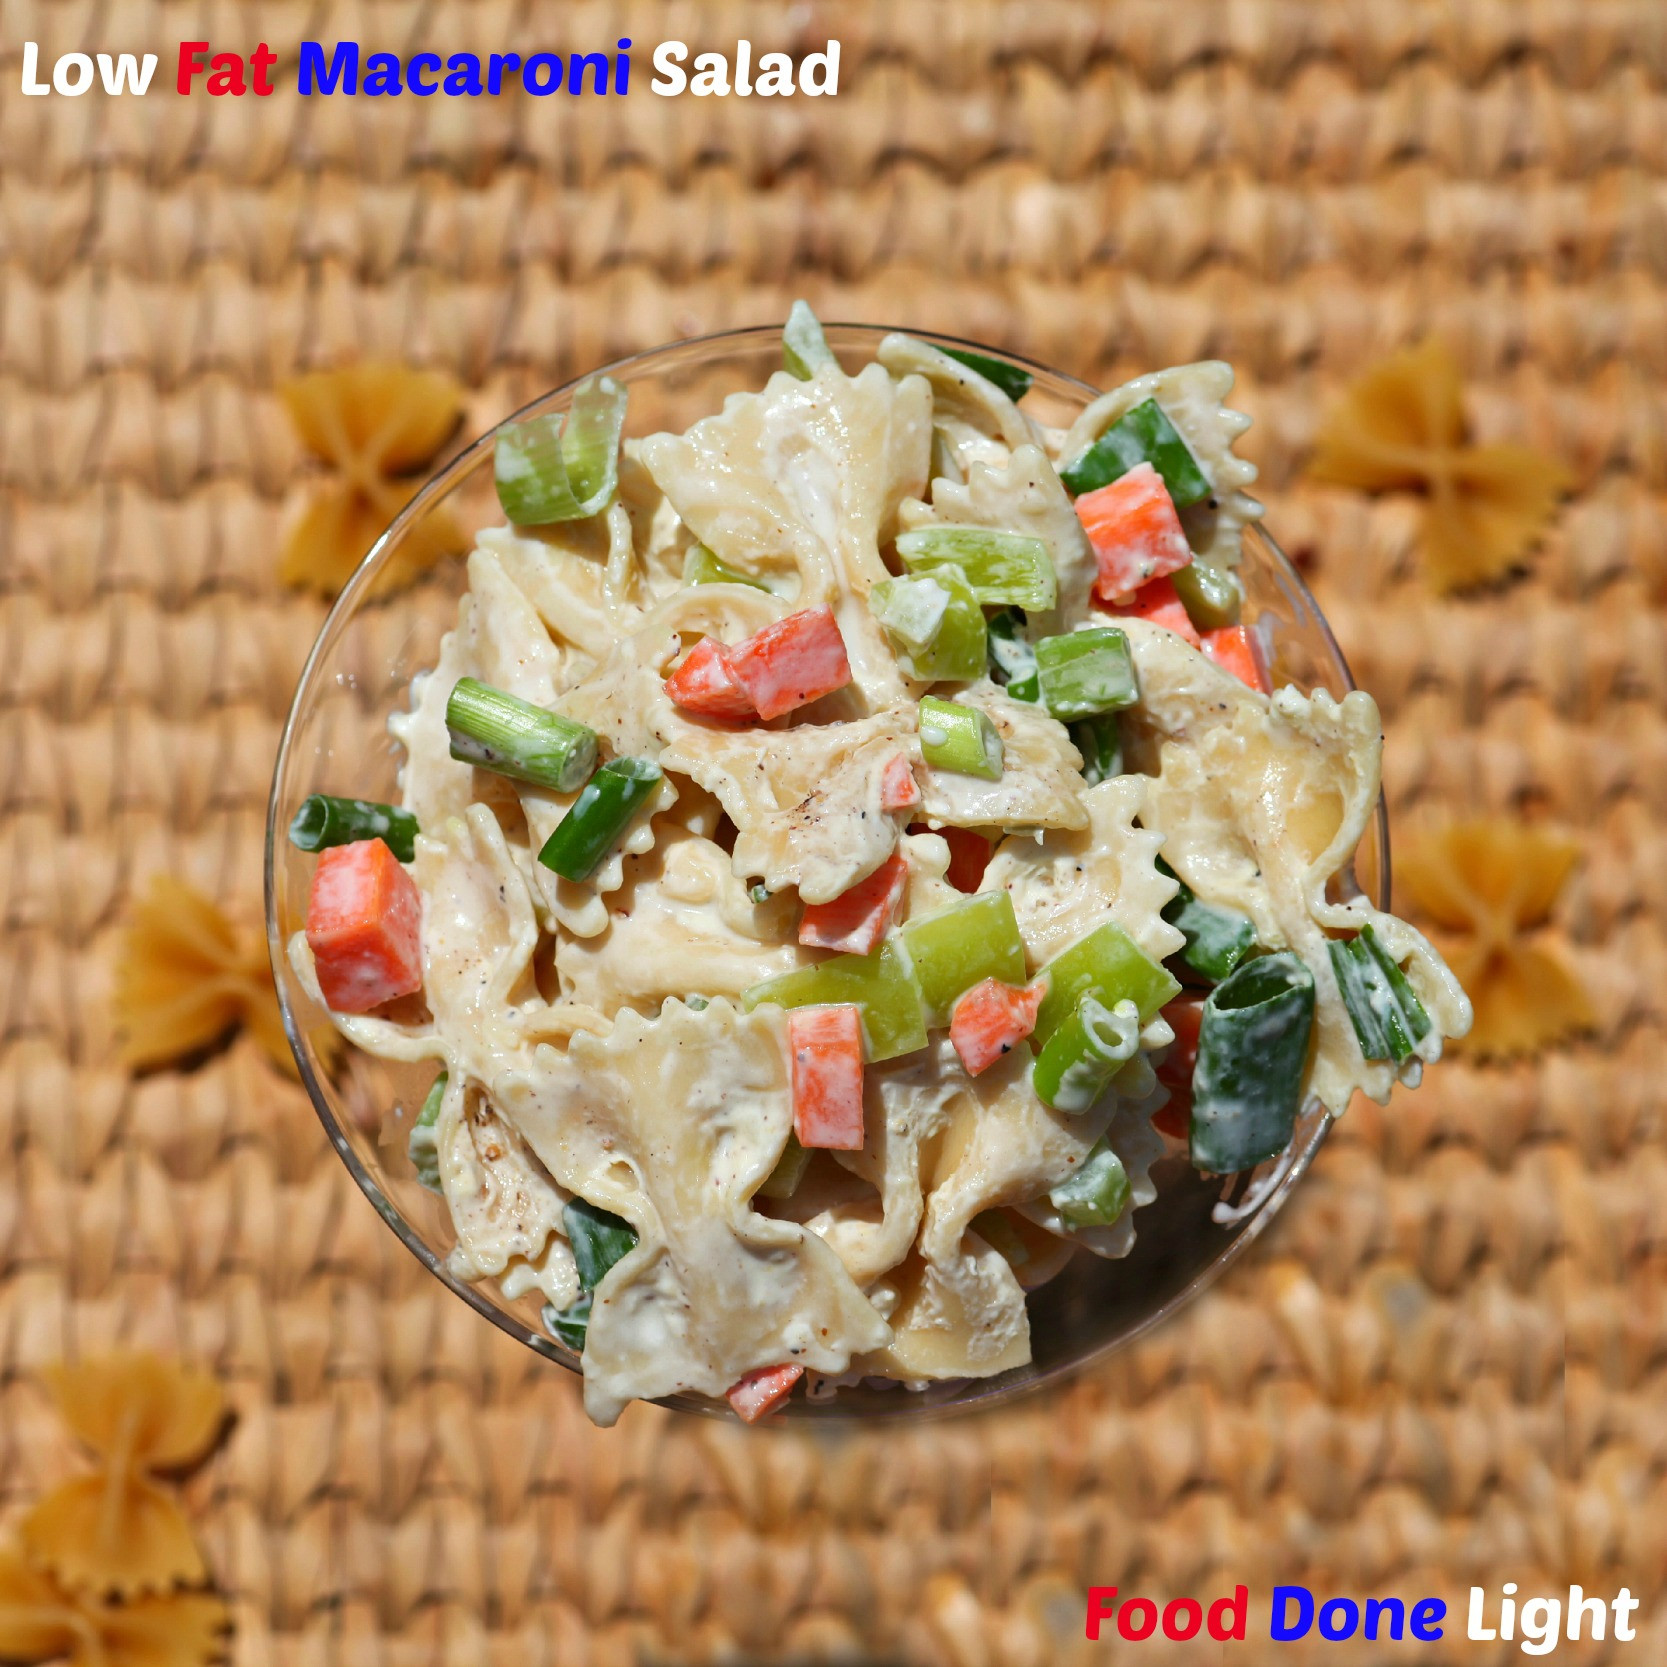 Low Calorie Pasta Salad
 Low Fat Macaroni Salad